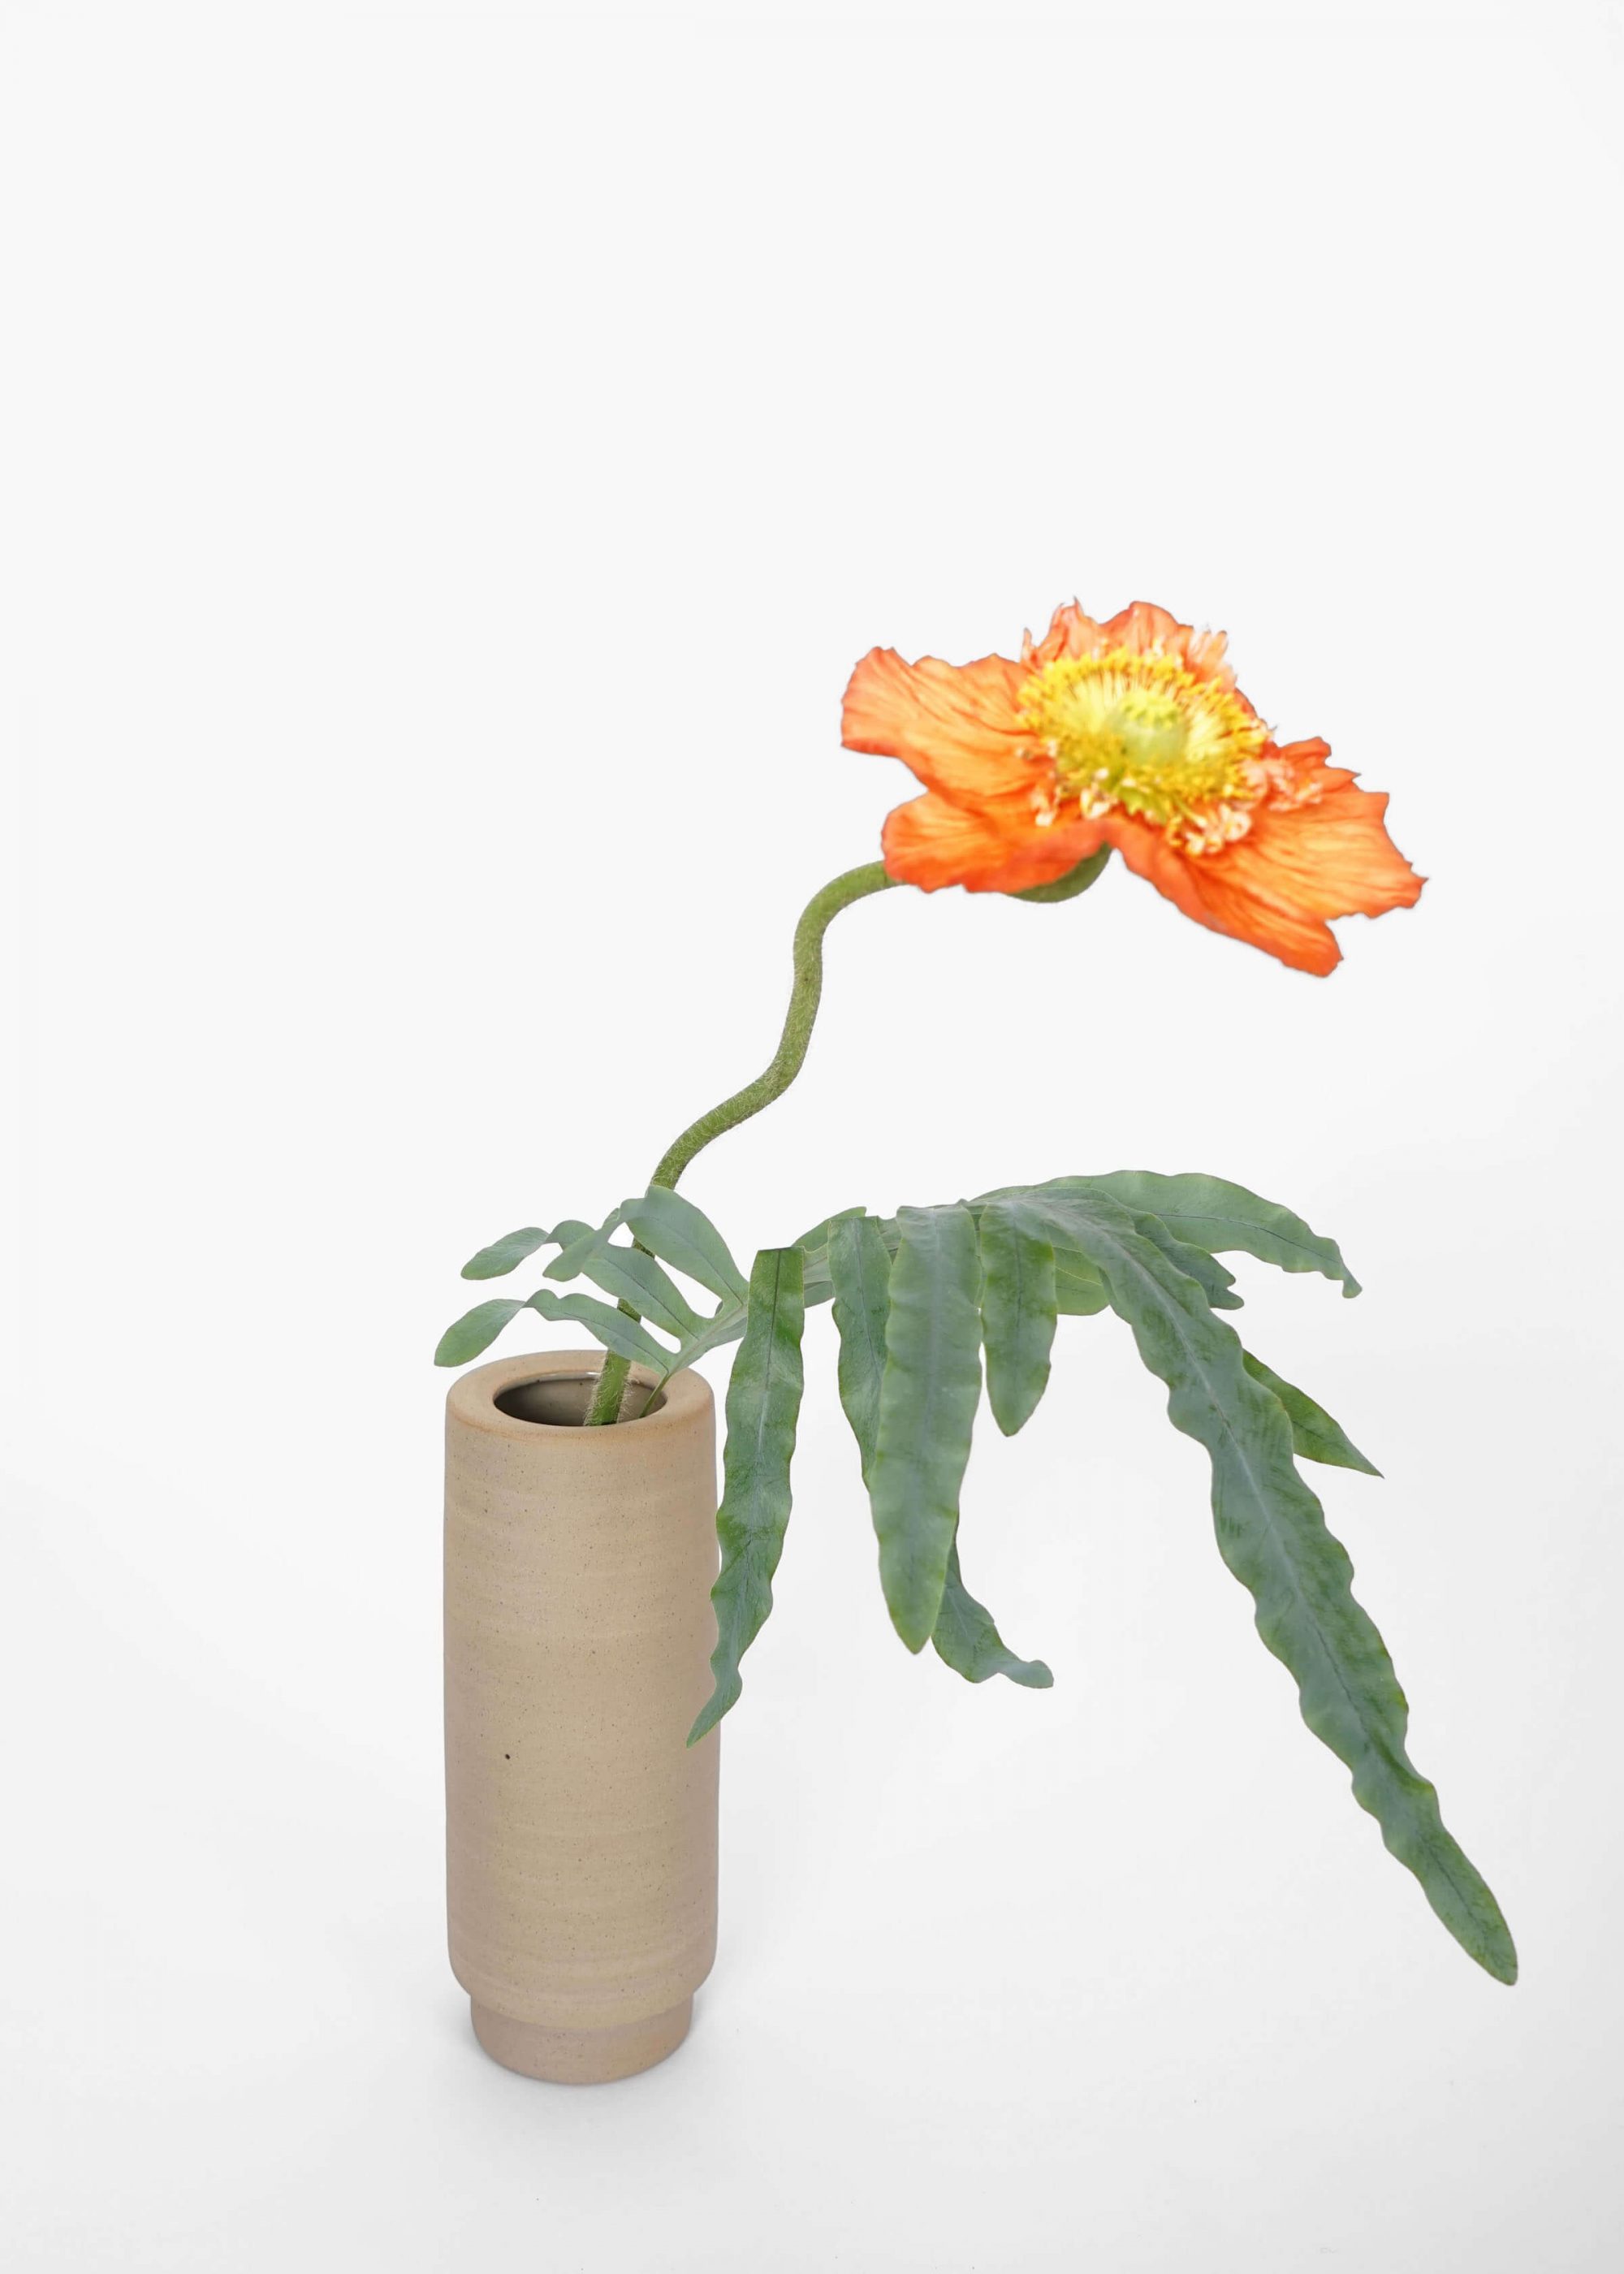 Product image for »Beuys« Small Unglazed Ceramic Vase | Genuine Stoneware